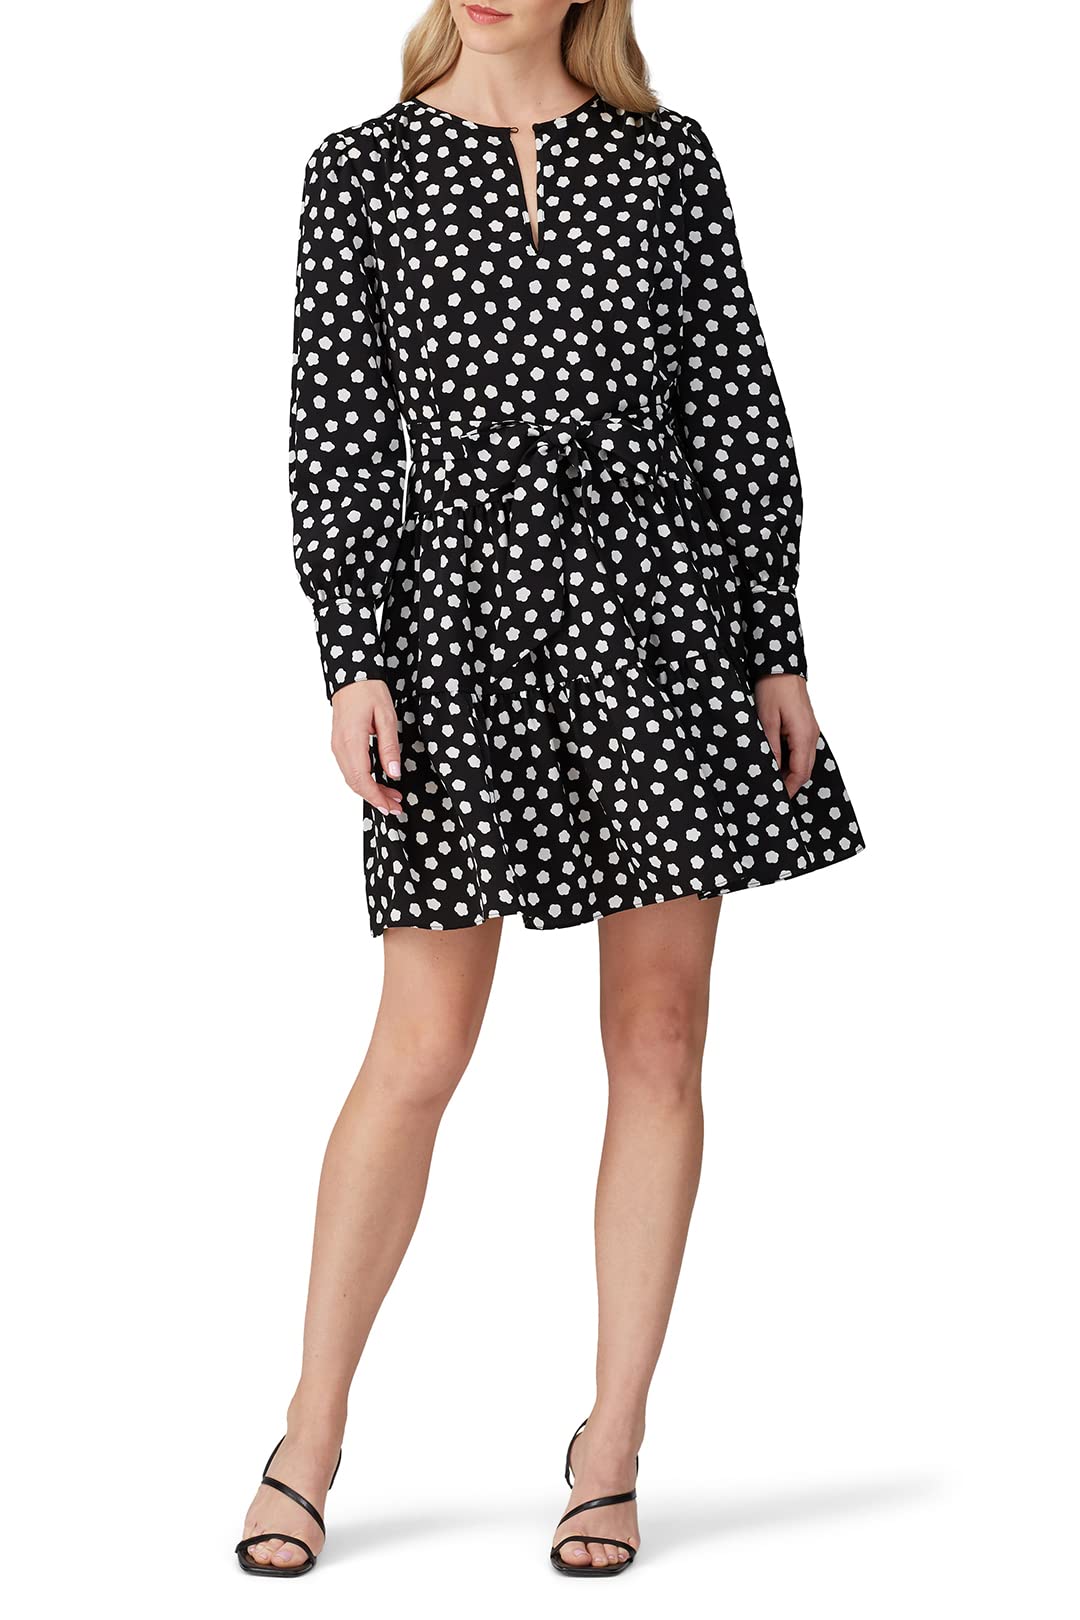 Kate Spade New York Rent The Runway Pre-Loved Cloud Dot Dress